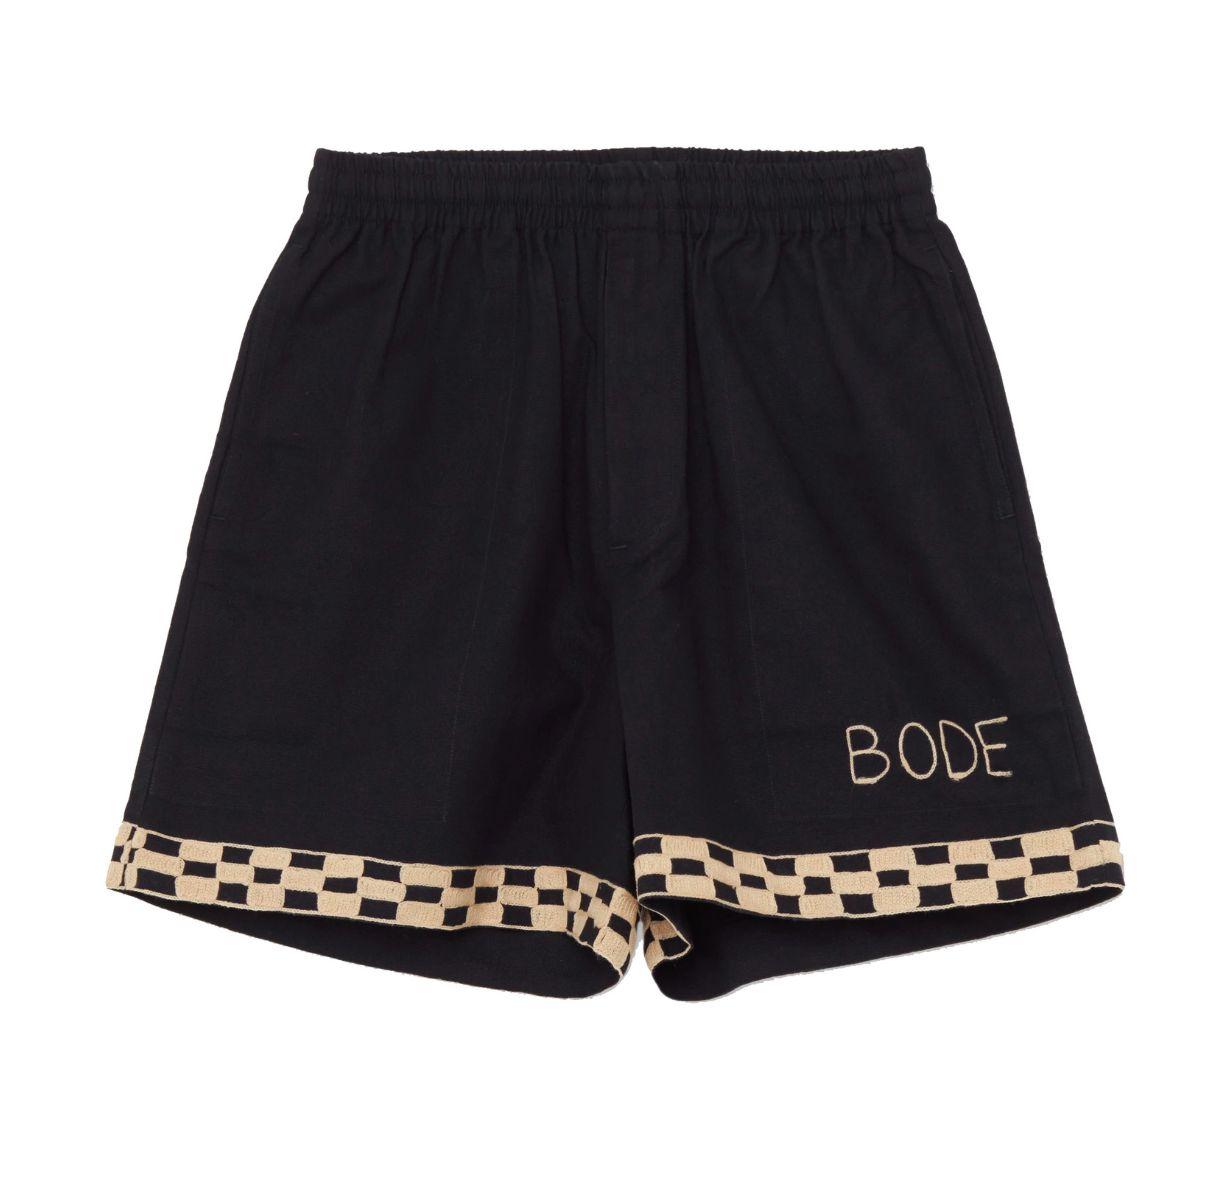 Bode shorts